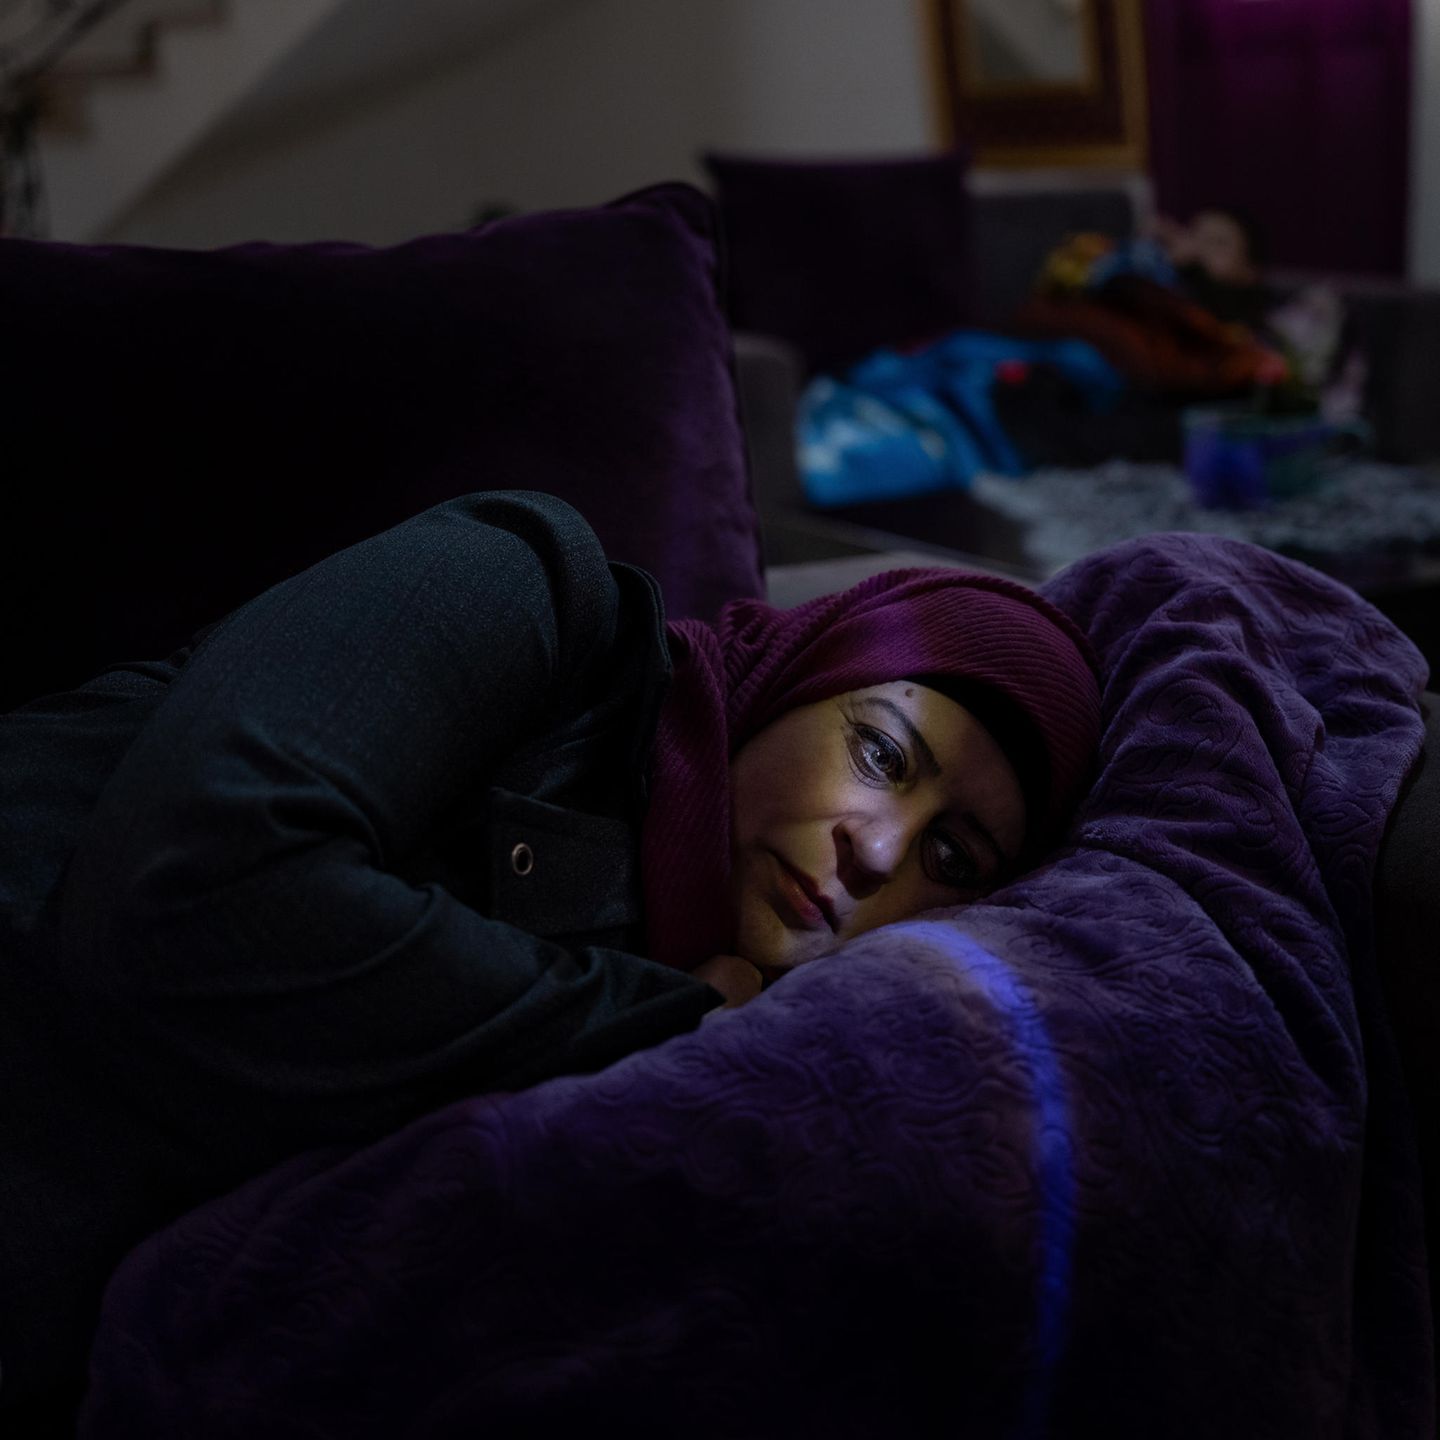 World Press Photo 2021: Frau liegt im Bett